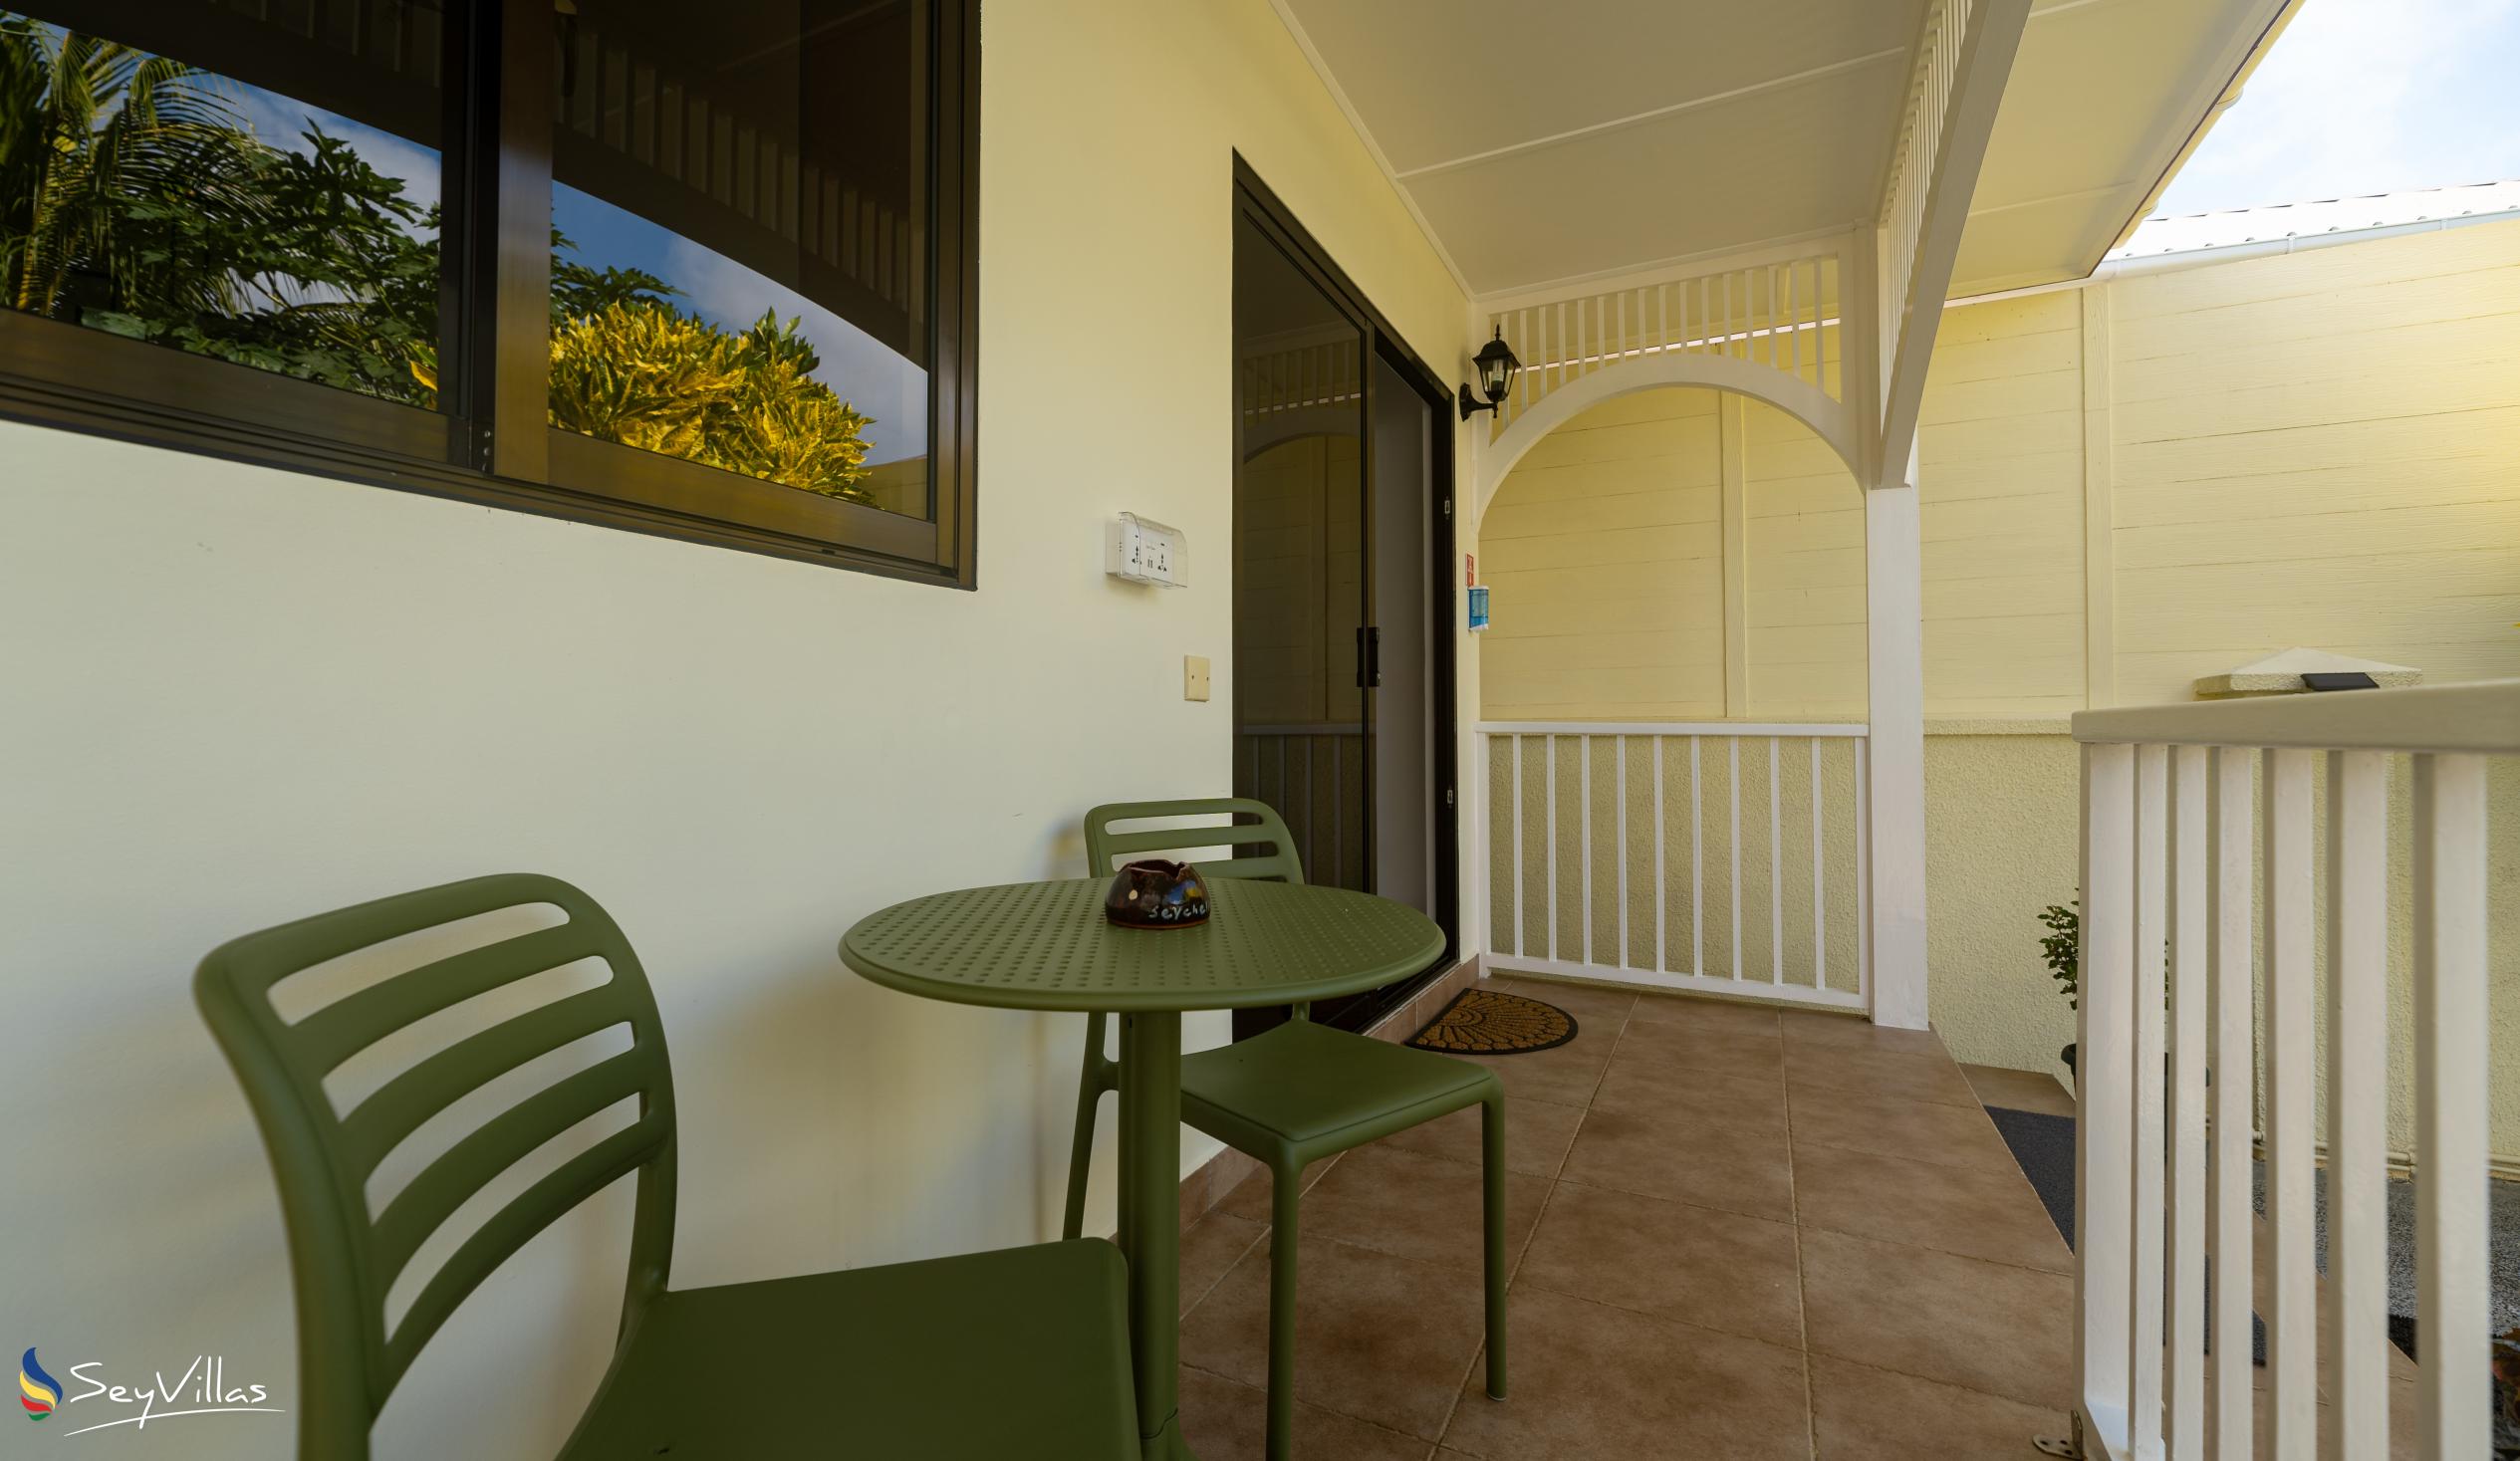 Foto 48: Emma's Guest House and Self-Catering - Villa con 1 camera - Mahé (Seychelles)